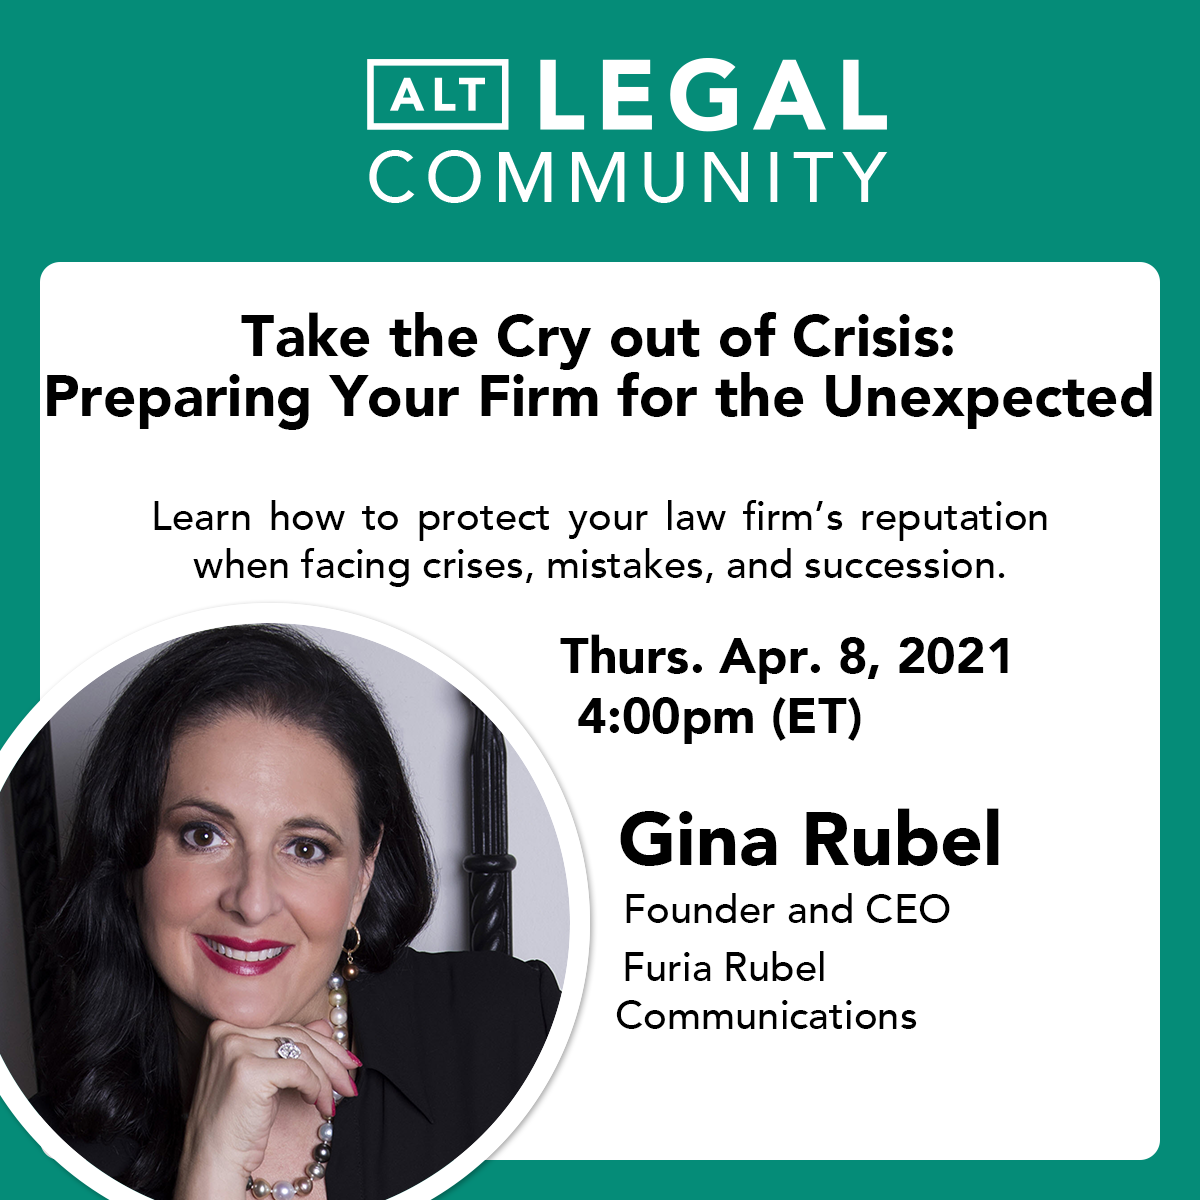 Crisis Communication Plan – Gina Rubel Presents for Alt Legal